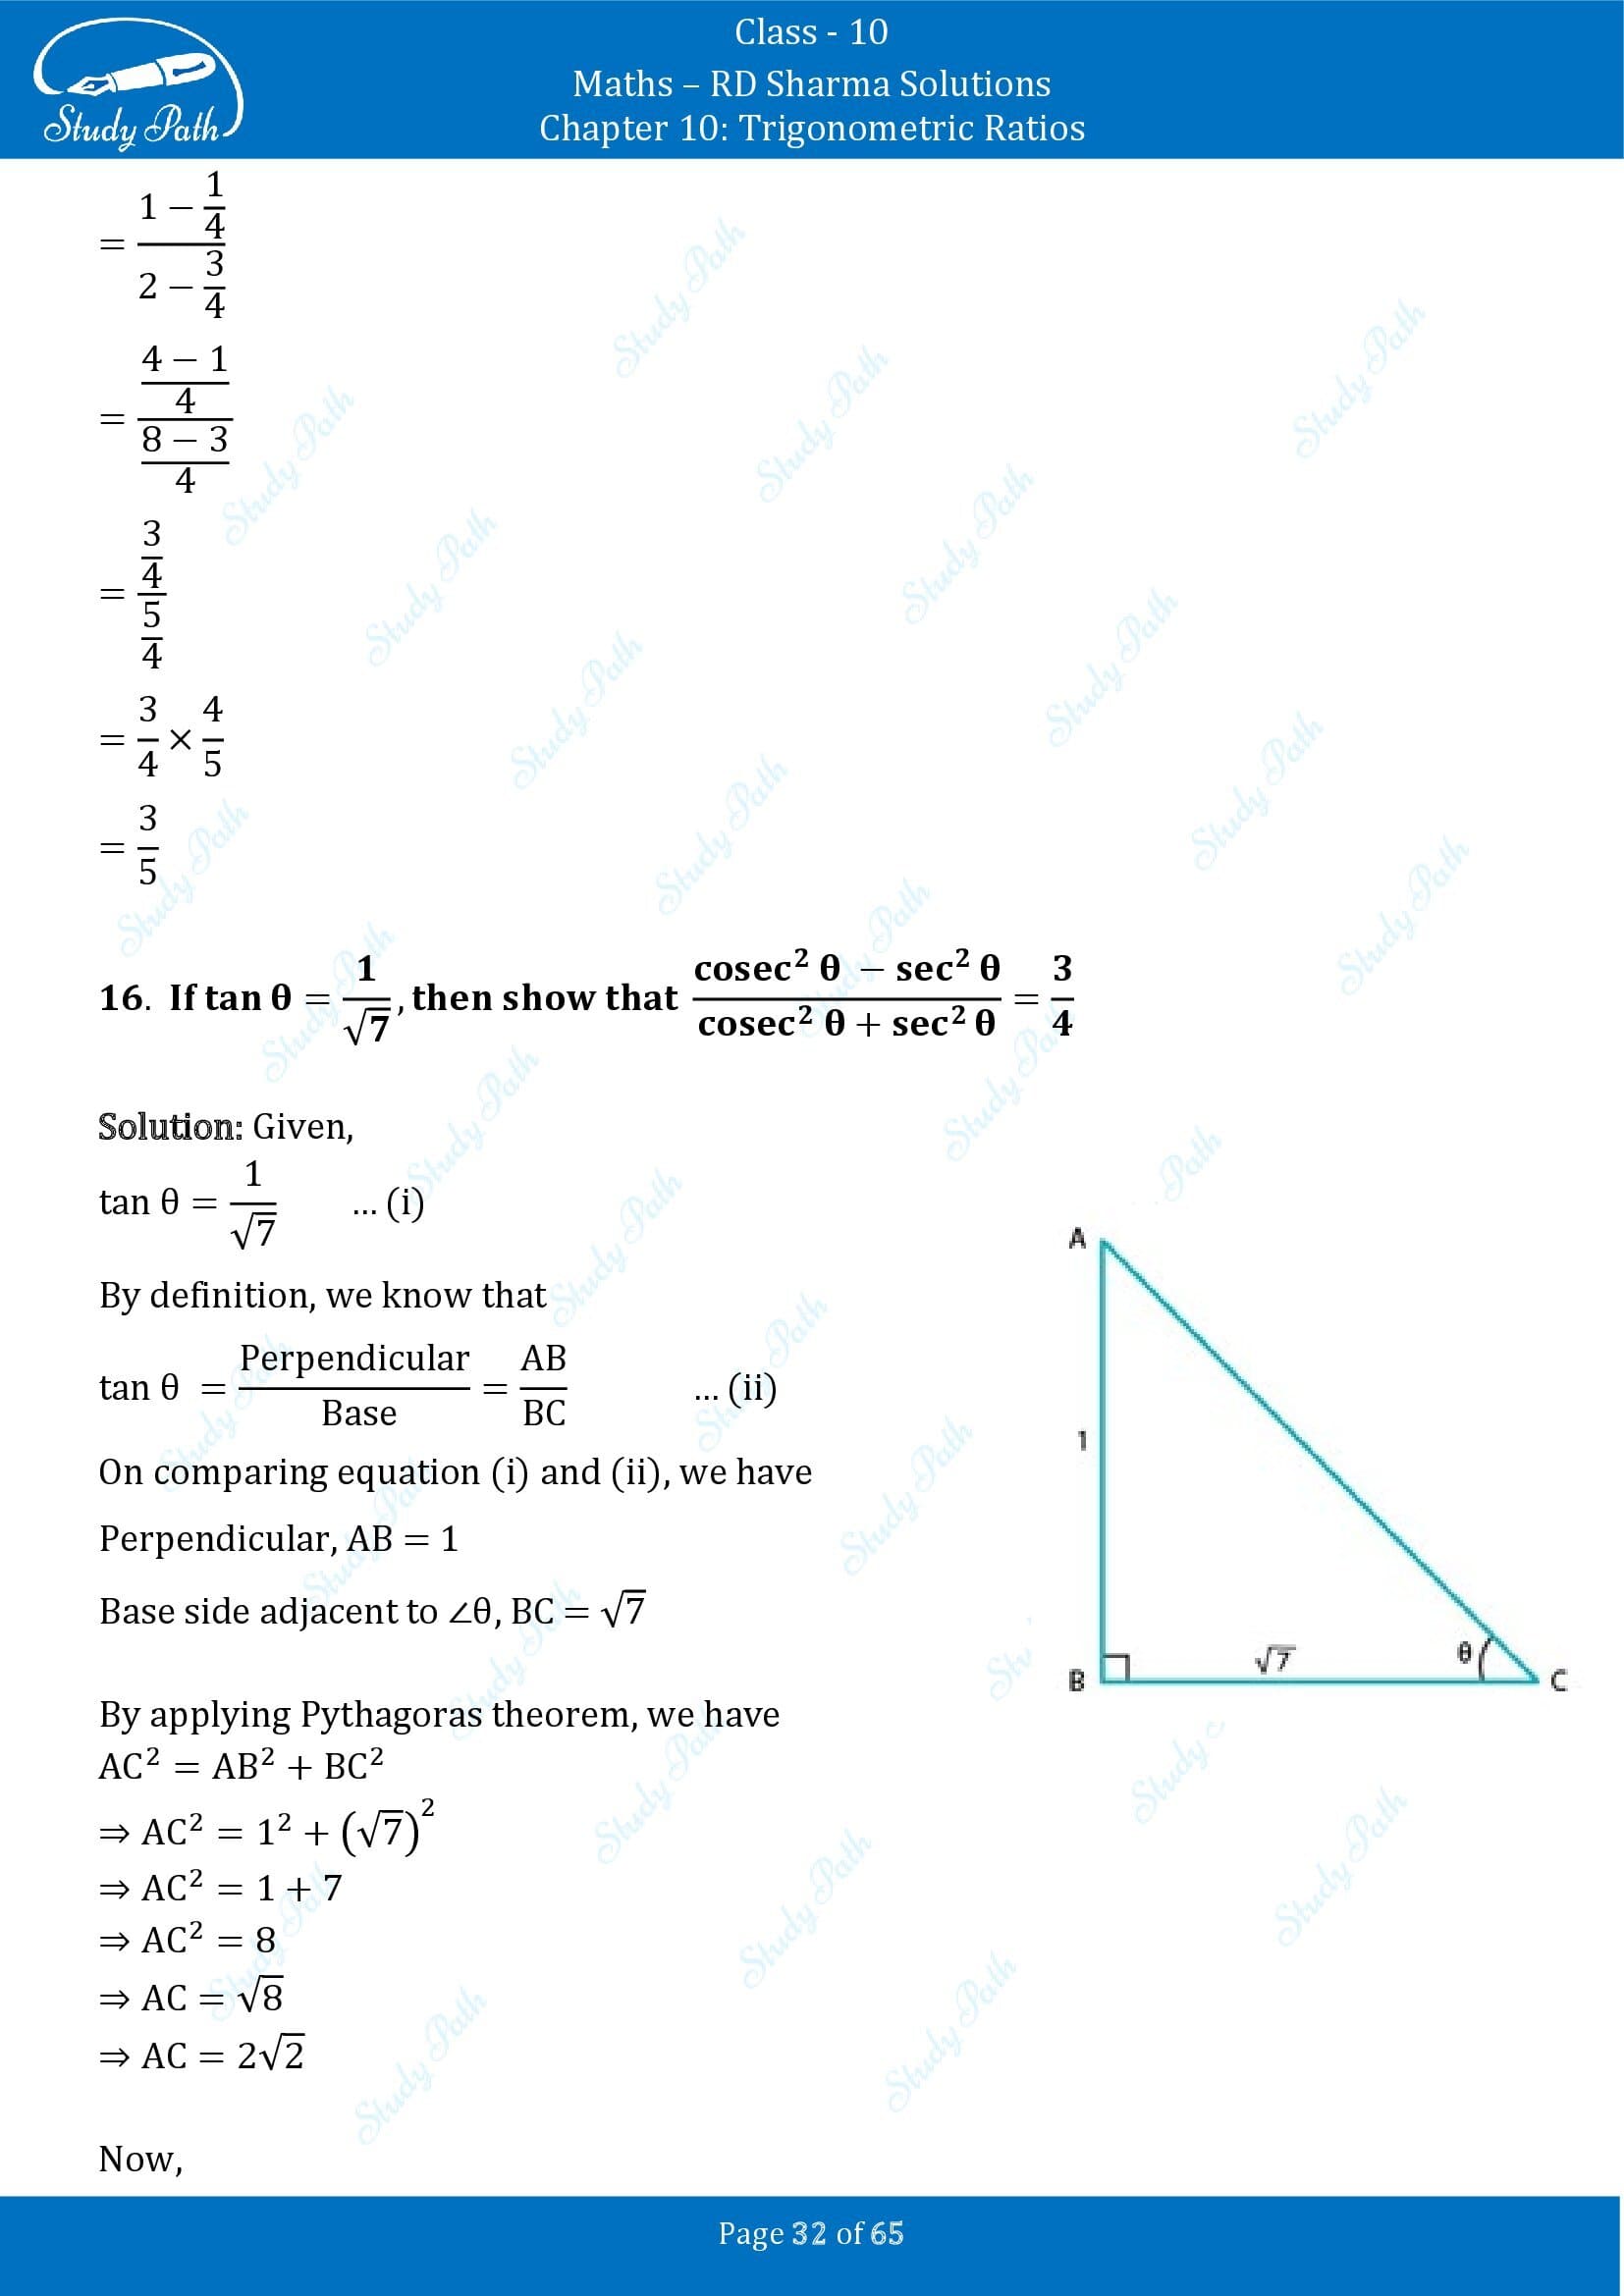 RD Sharma Solutions Class 10 Chapter 10 Trigonometric Ratios Exercise 10.1 00032